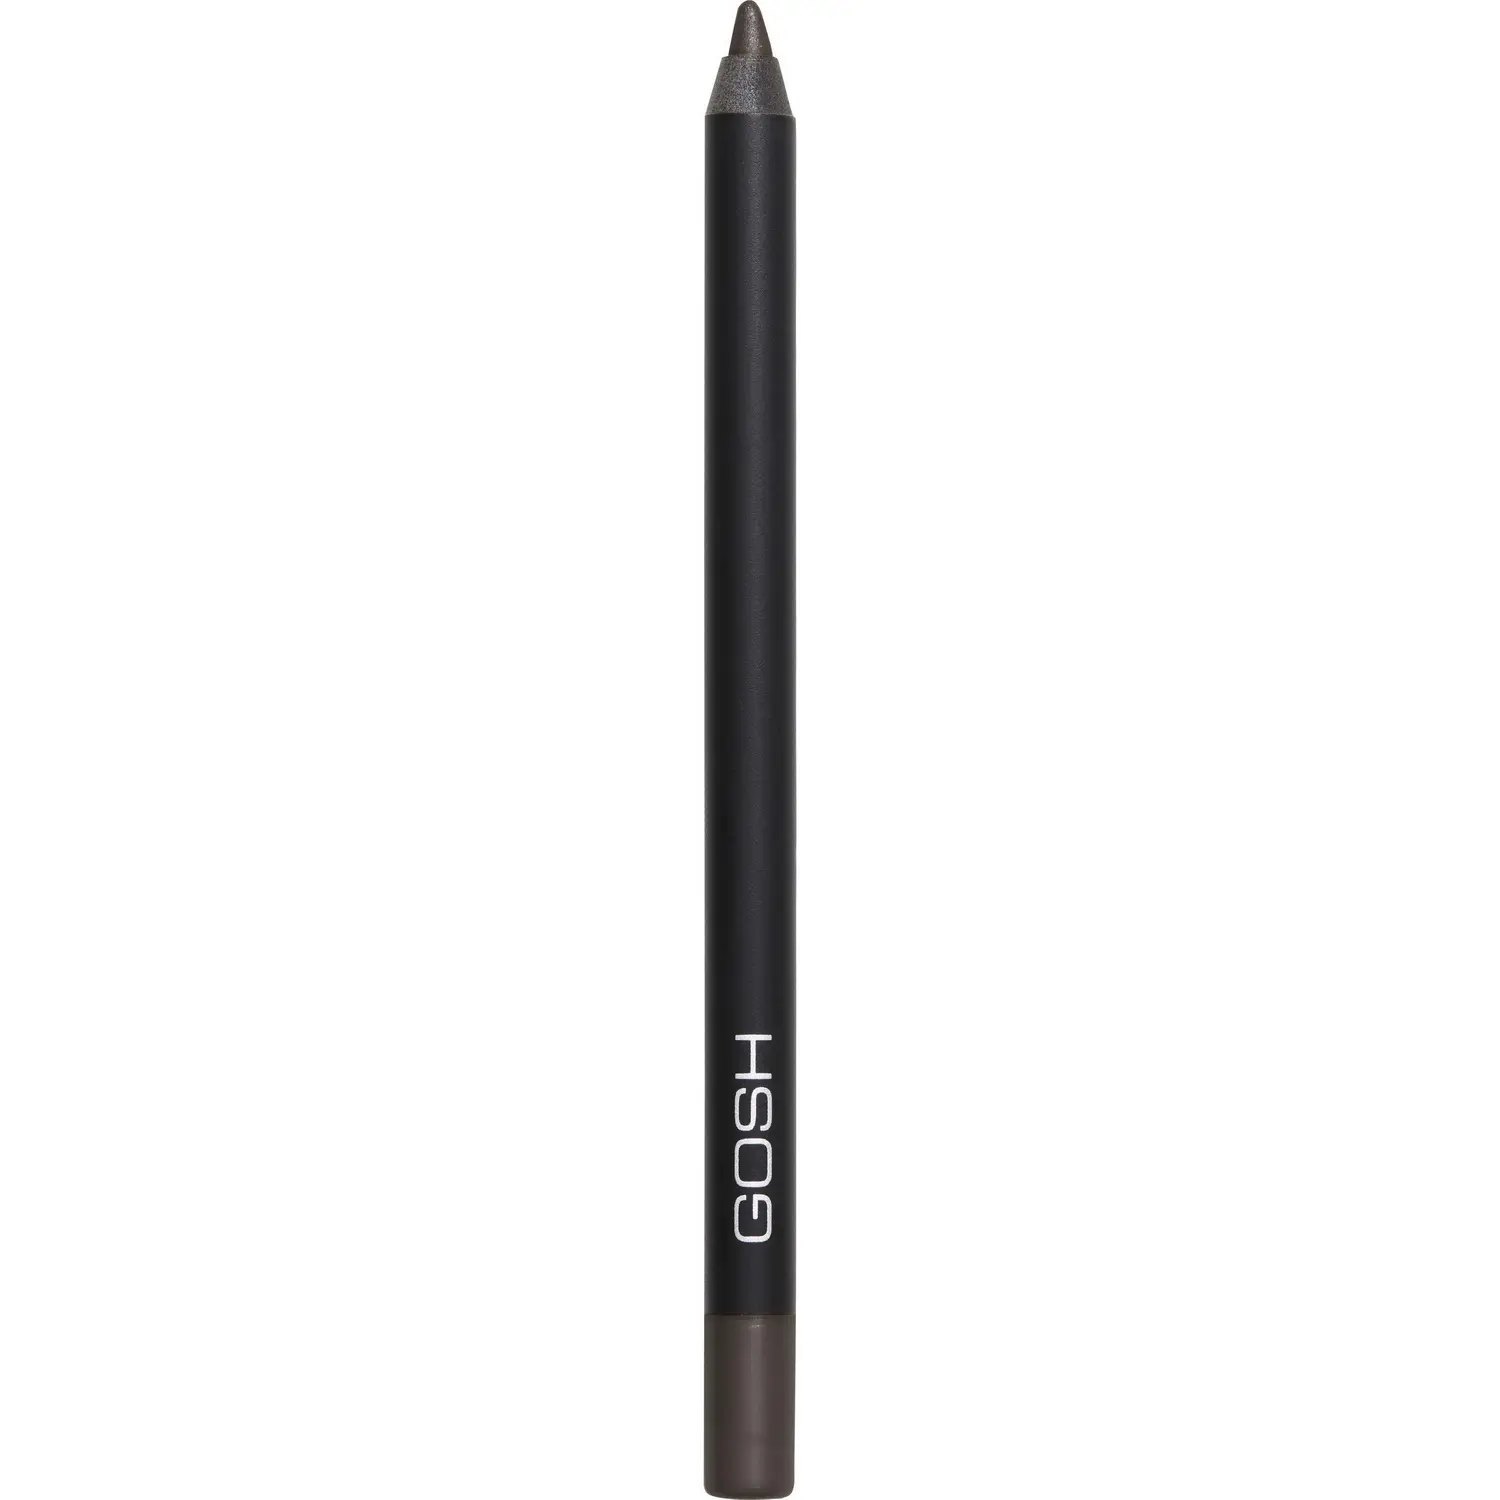 Олівець для очей Gosh Velvet Touch Eye Pencil водостійкий відтінок 017 (Rebellious brown) 1.2 г - фото 1